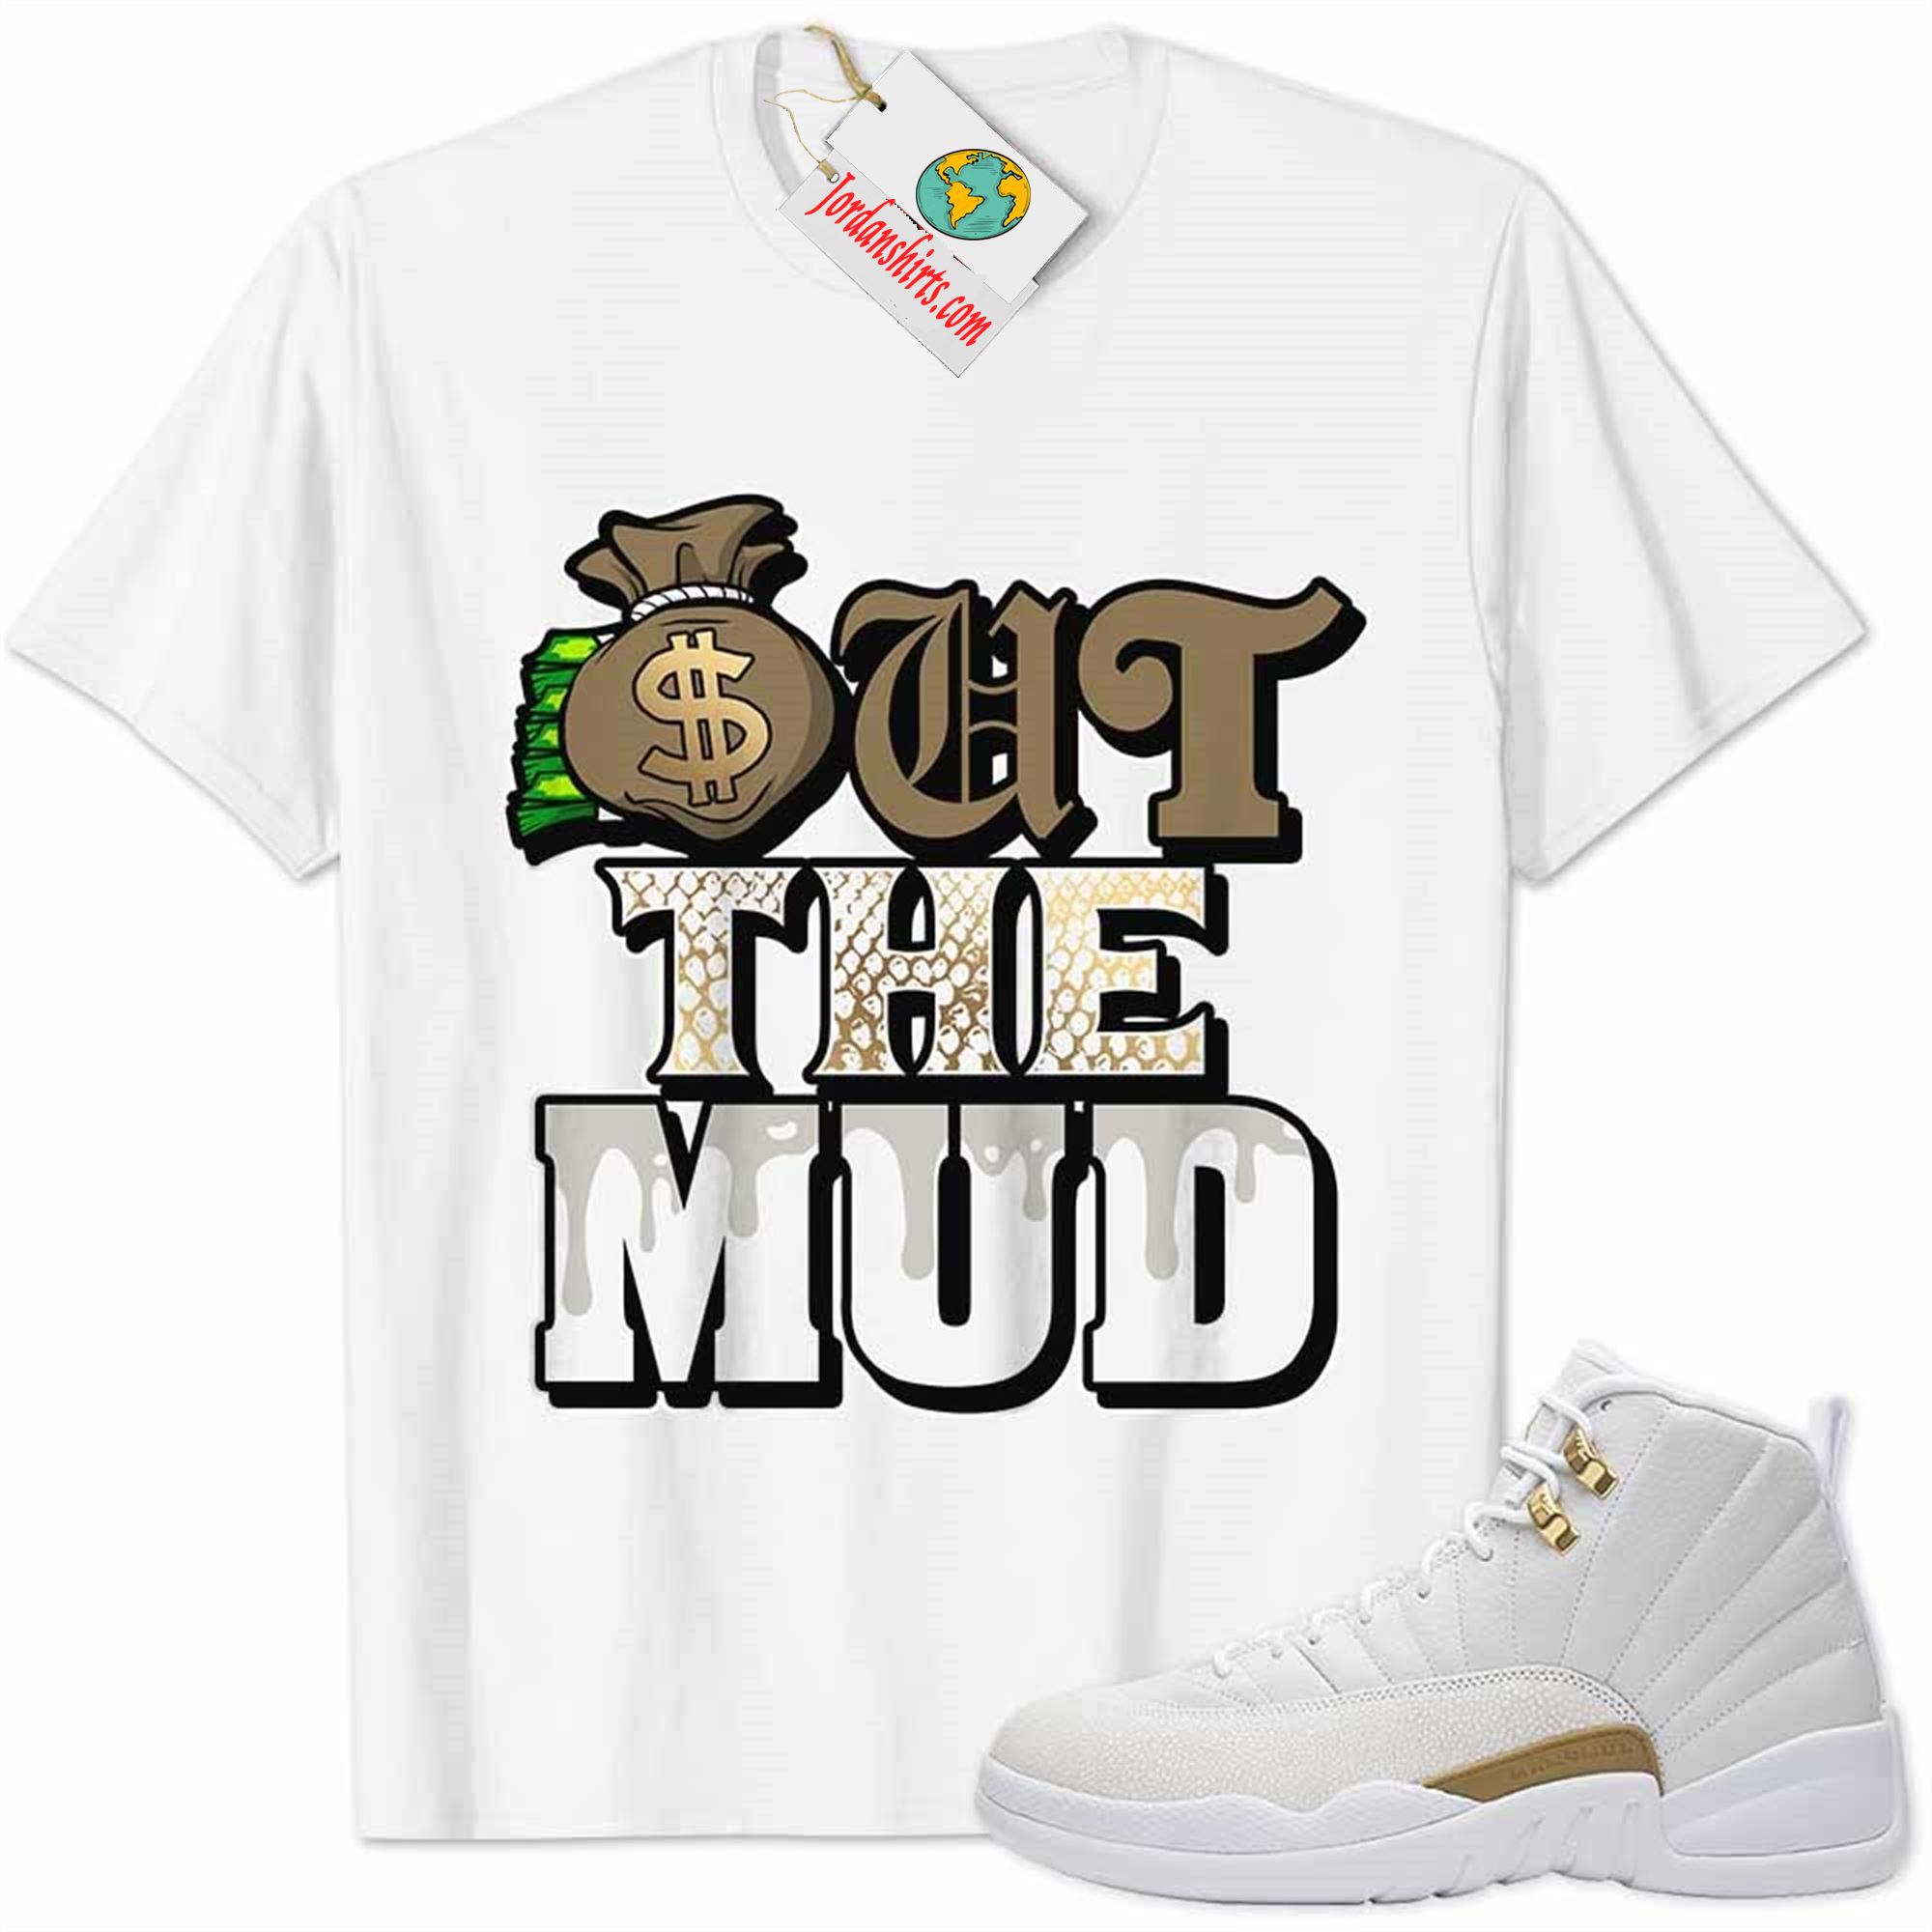 Jordan 12 Shirt, Jordan 12 Ovo Shirt Out The Mud Money Bag White Full Size Up To 5xl